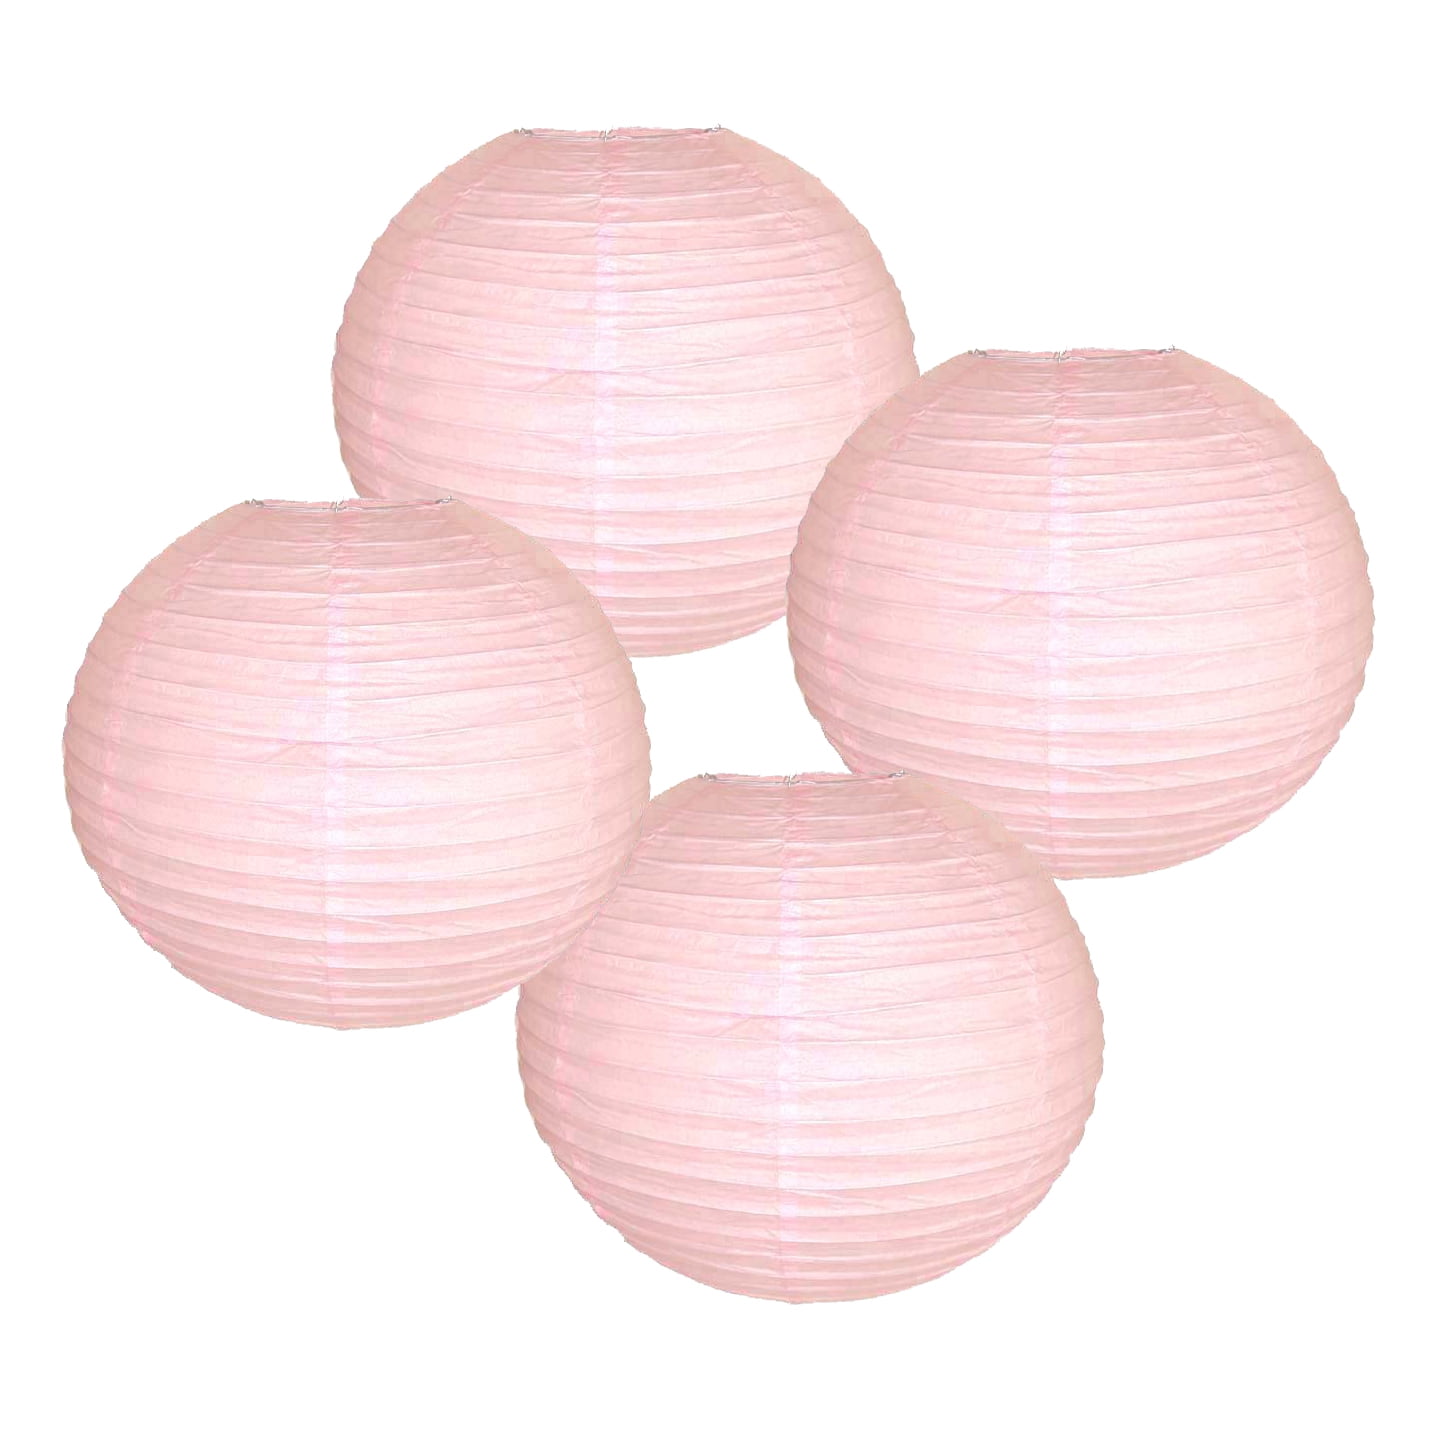 20 Pale Pink Paper Lanterns Set Of 4 Decorative Round Chinese